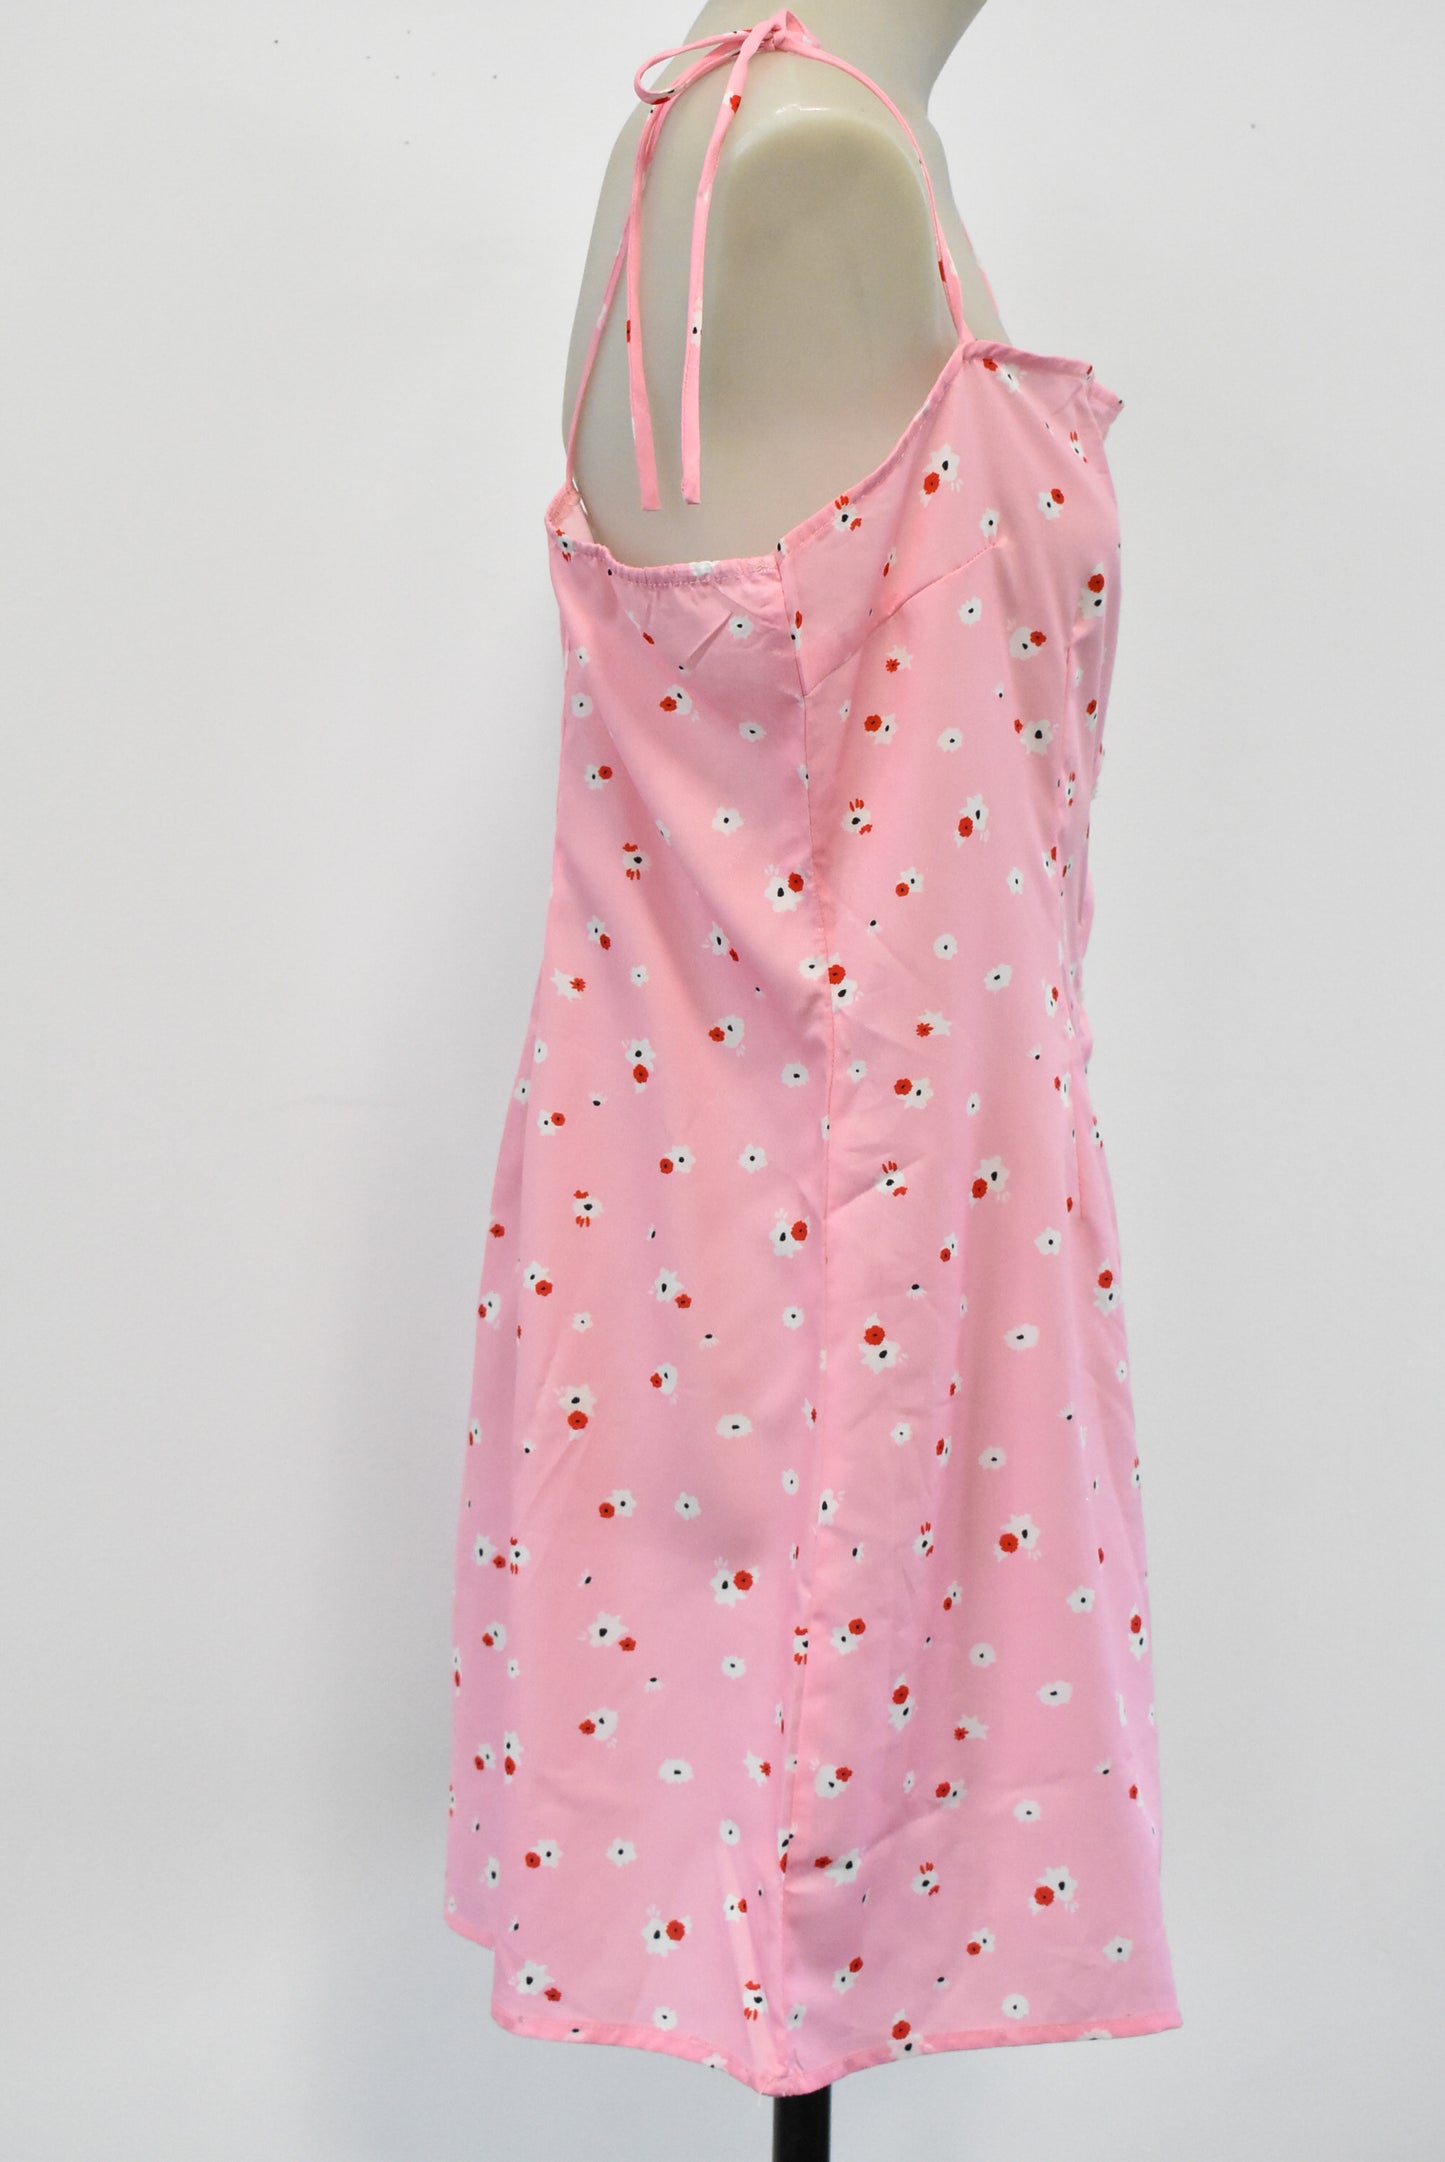 Polly light pink floral mini dress, size 16